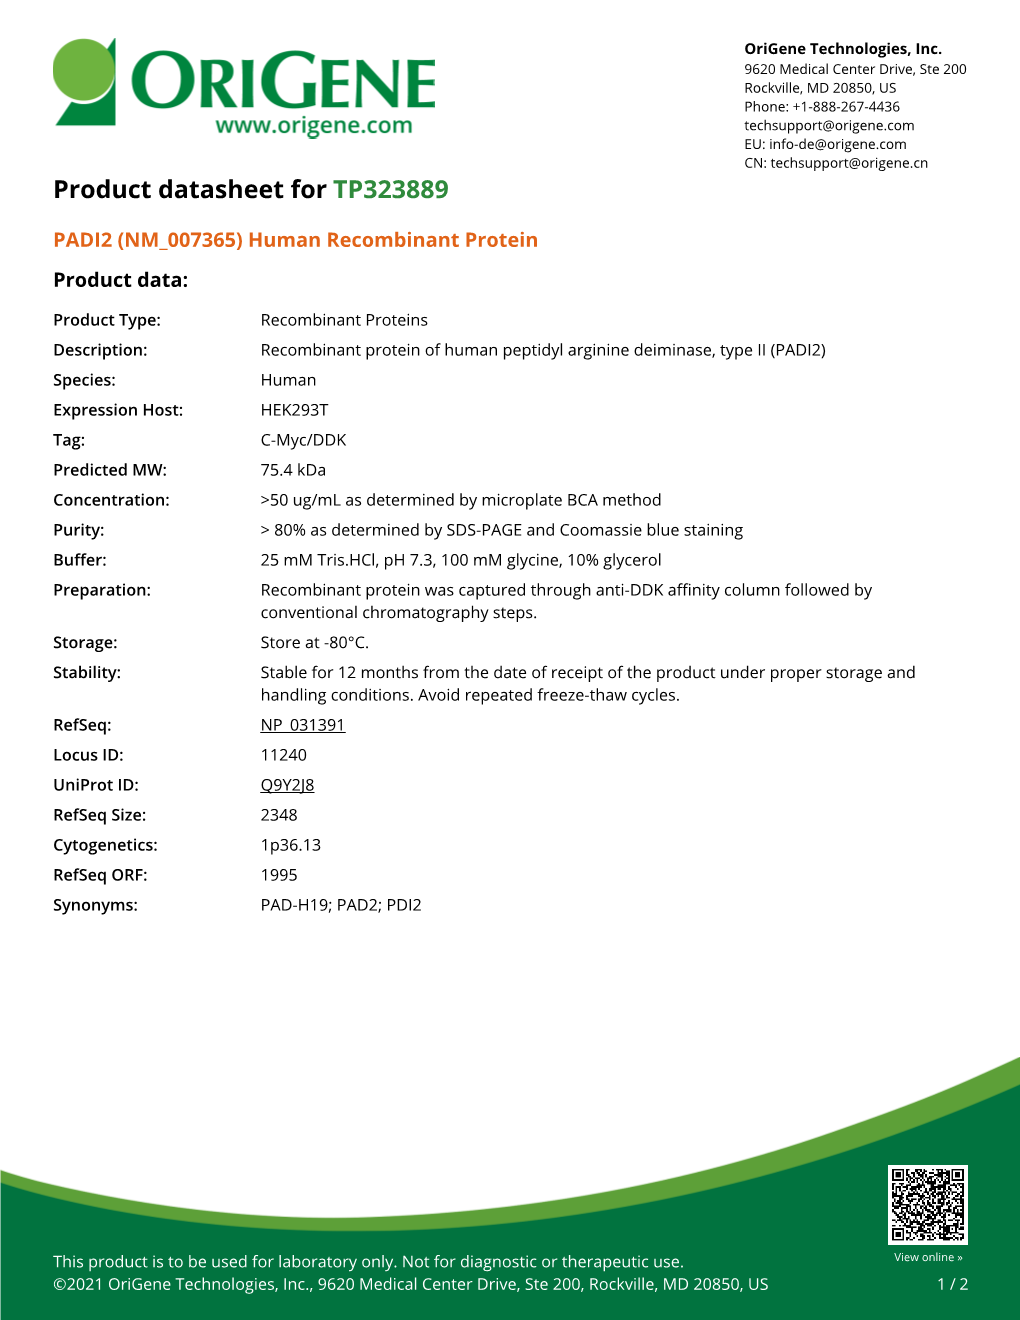 PADI2 (NM 007365) Human Recombinant Protein Product Data